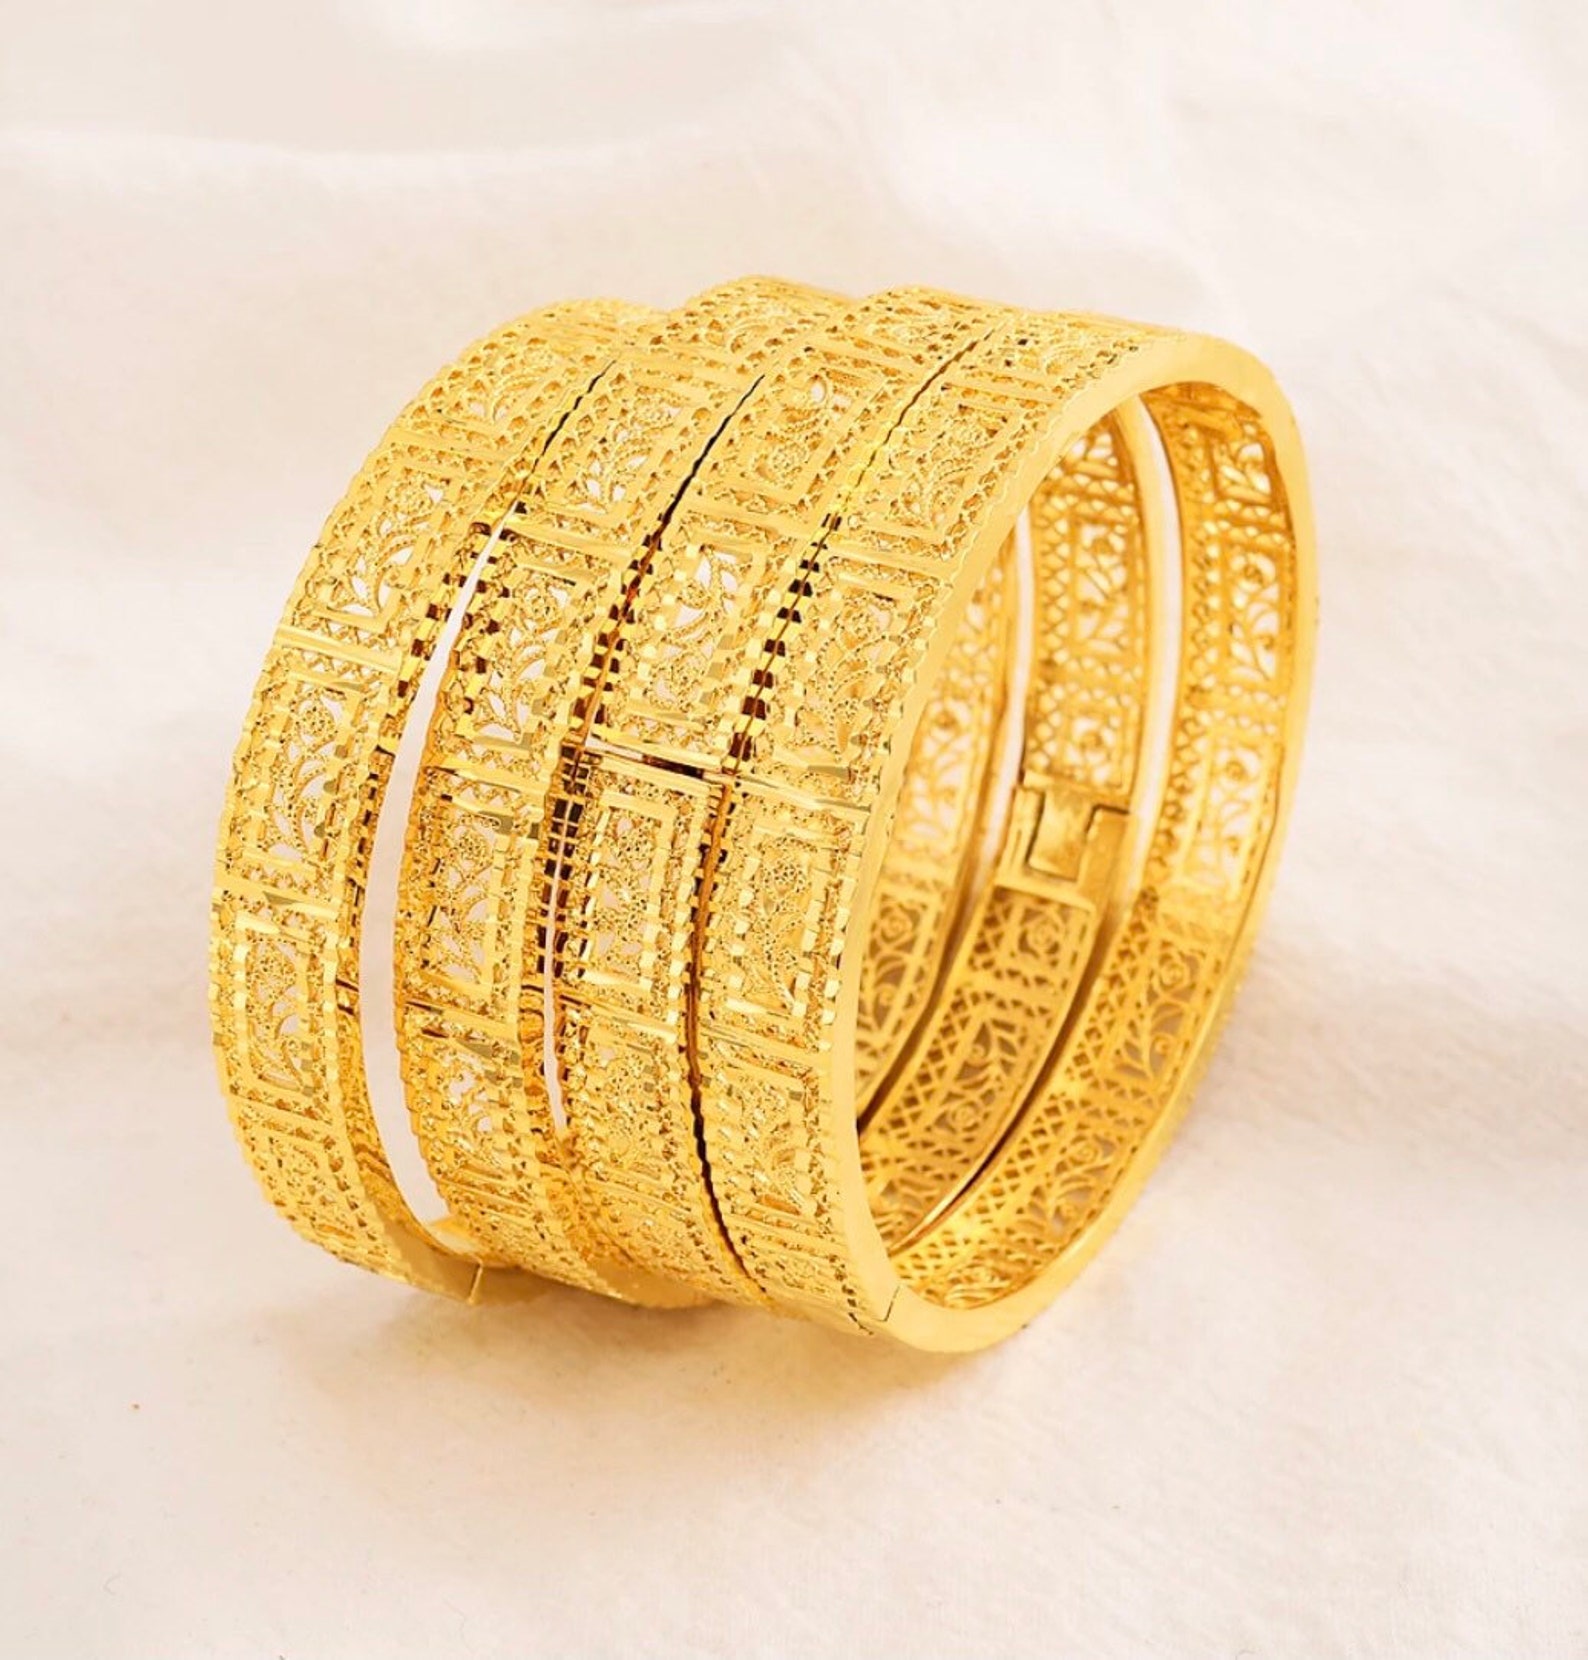 24K real gold plated Dubai bangle jewelry bangles 2 pcs bangle | Etsy